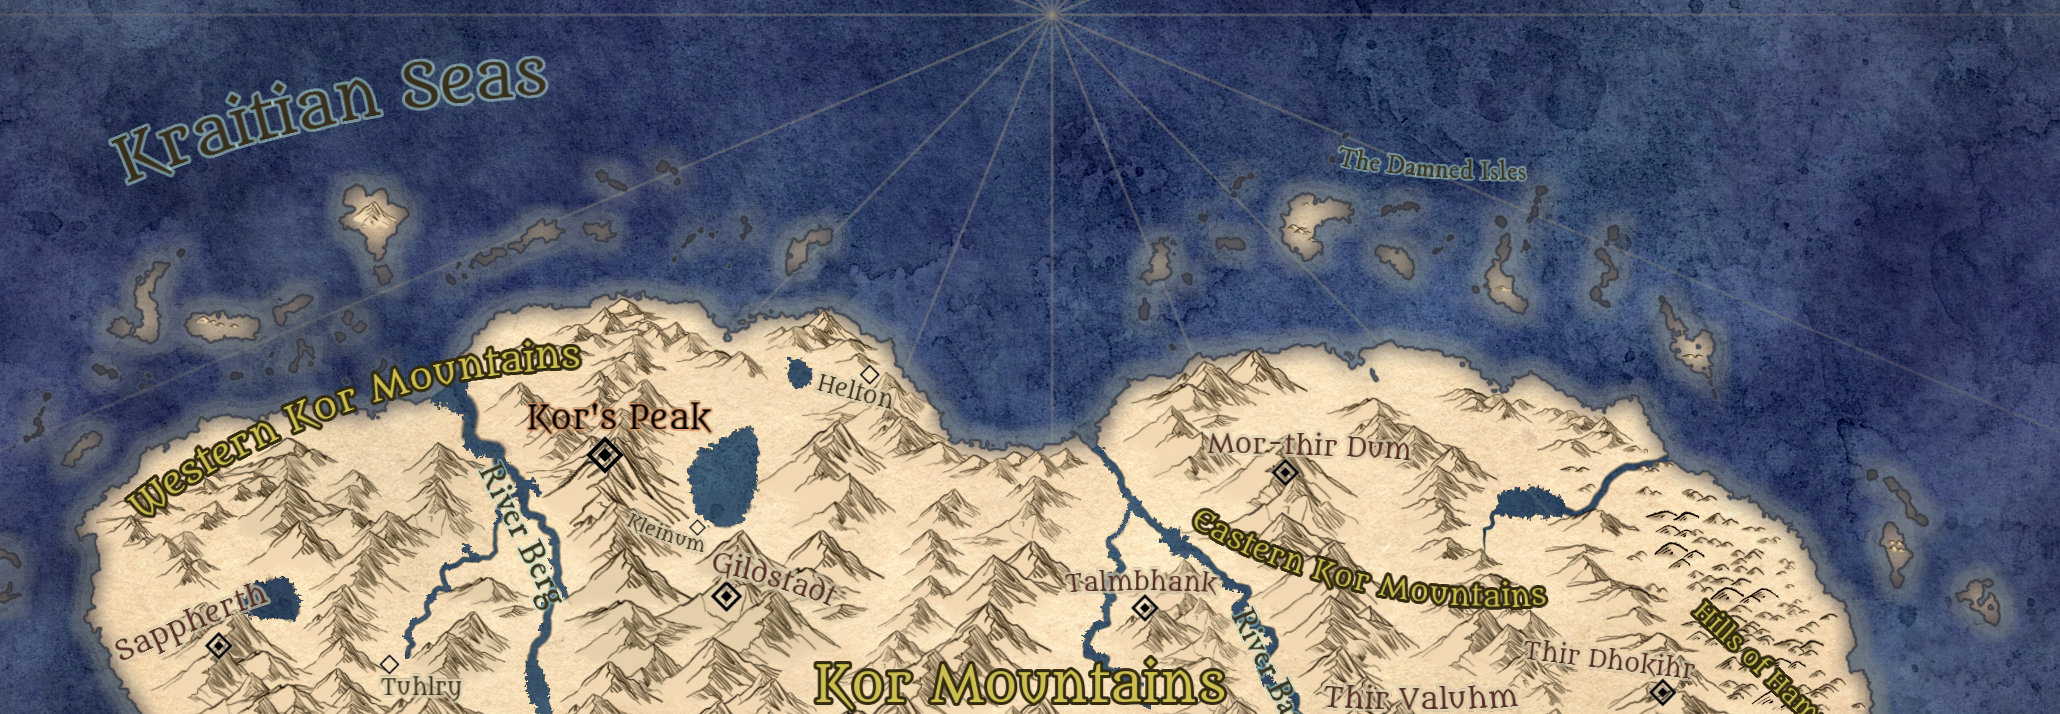 Kraitian Seas cover